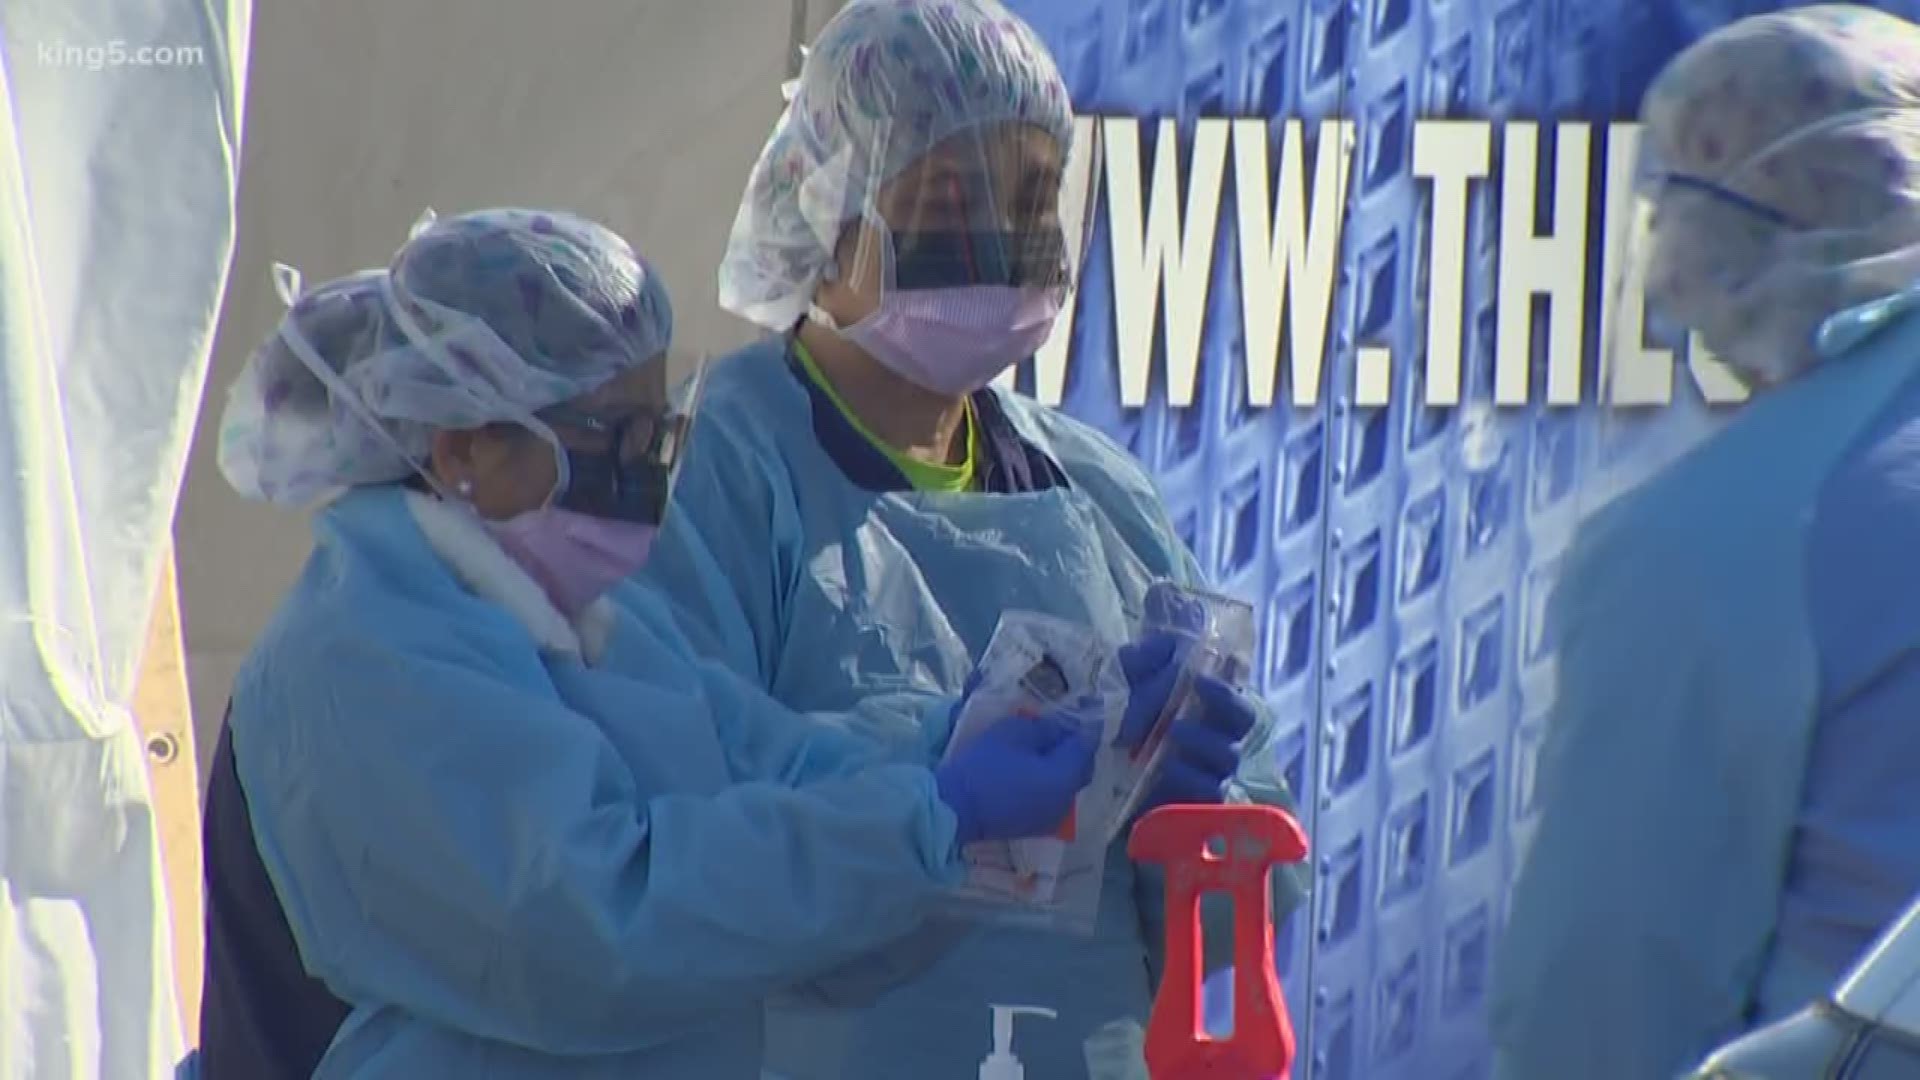 Disaster expert Eric Holdeman says Washington needs to do more to stop the spread of coronavirus.